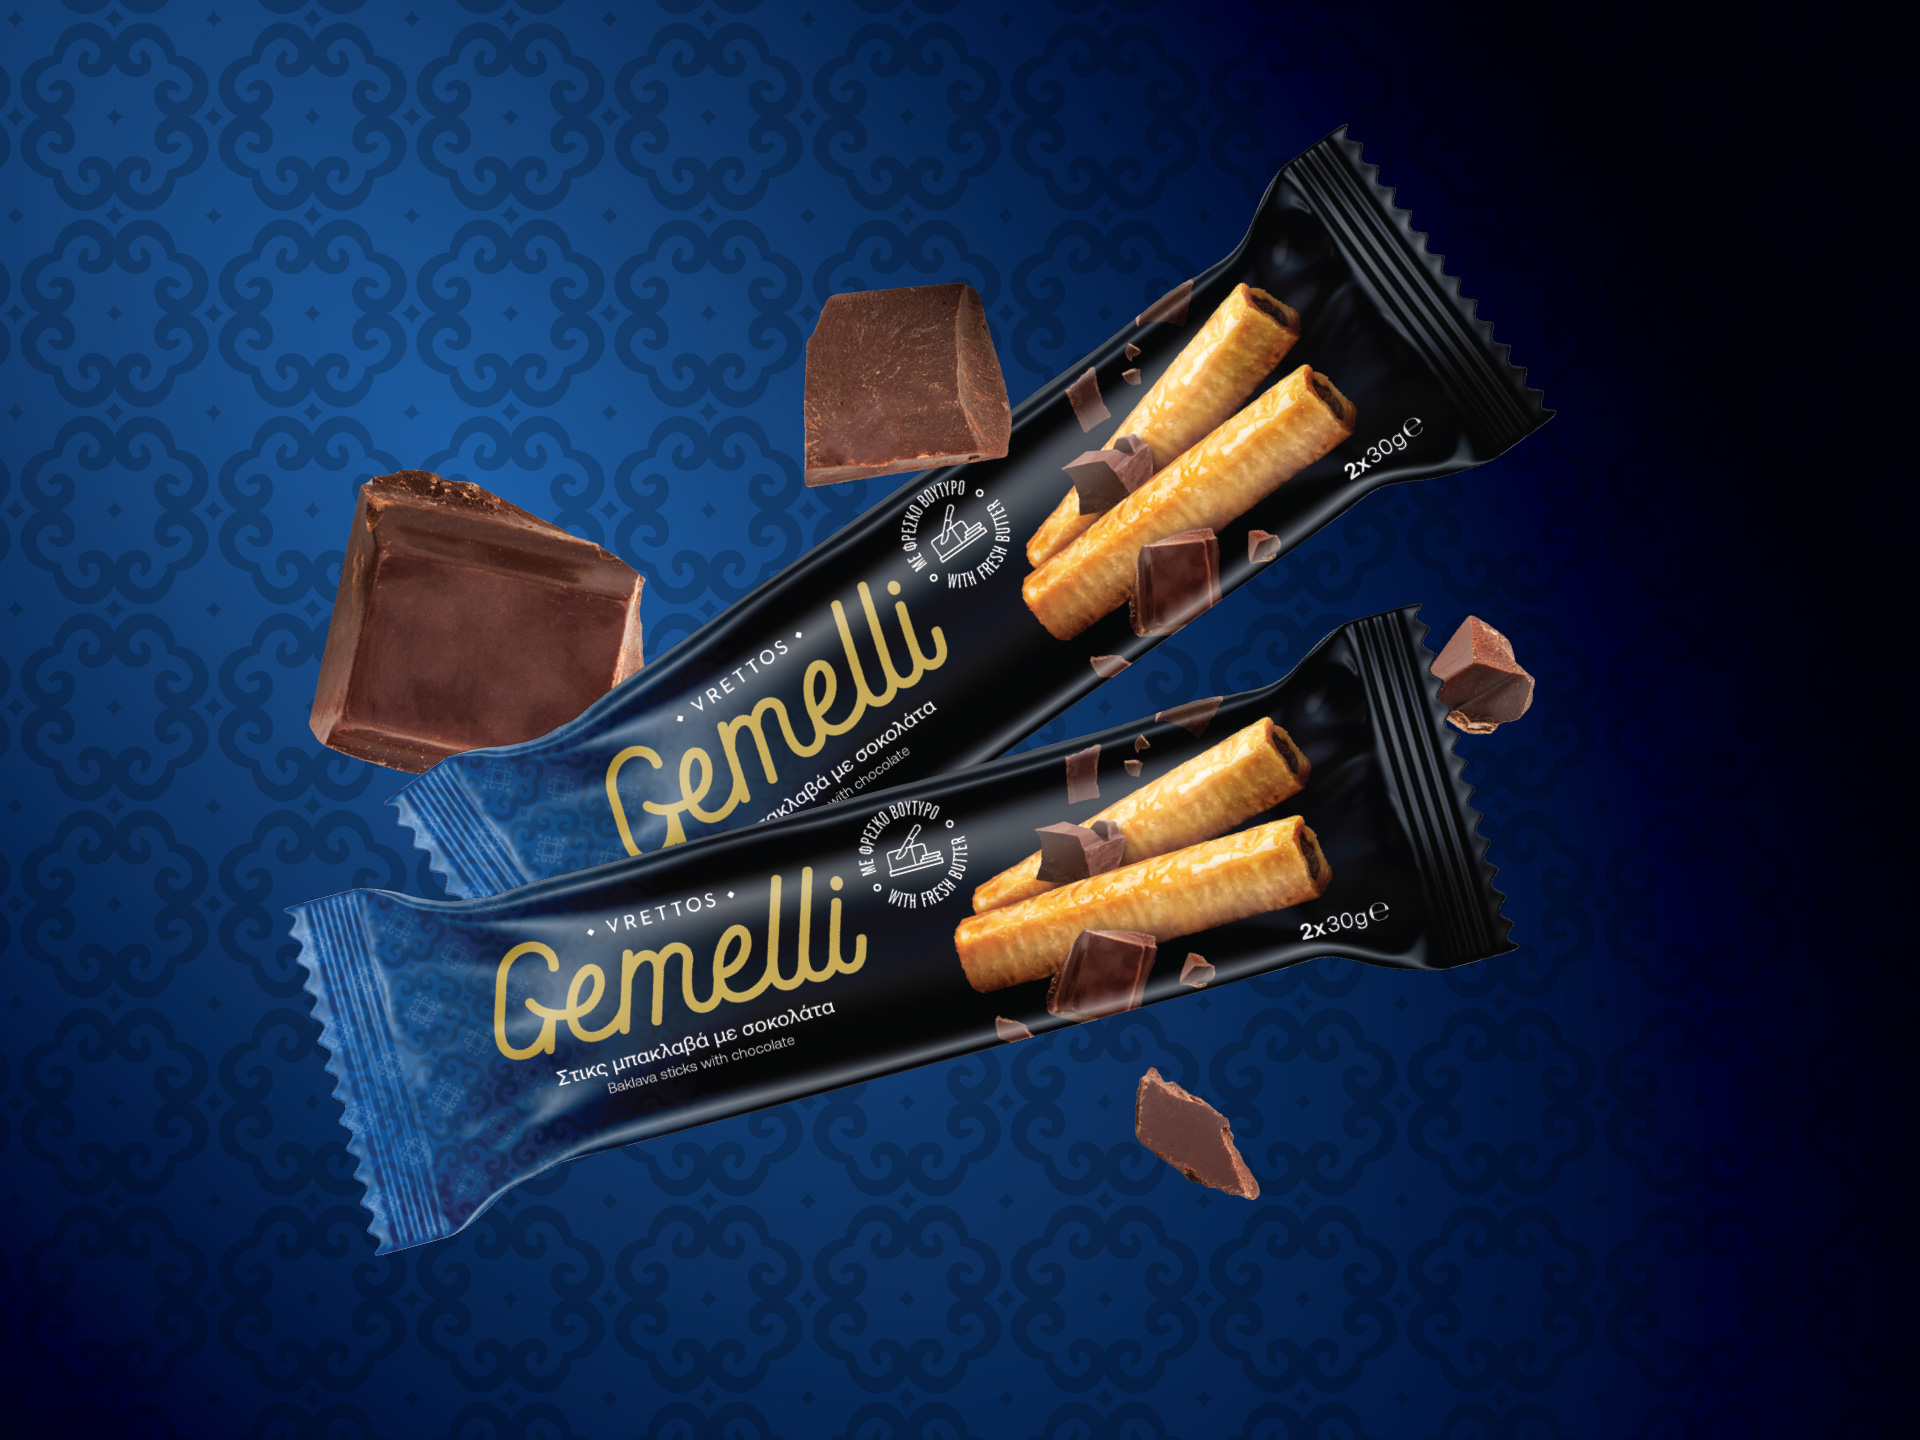 Gemelli: Ήρθε για να σας προσφέρει νέες γευστικές απολαύσεις!